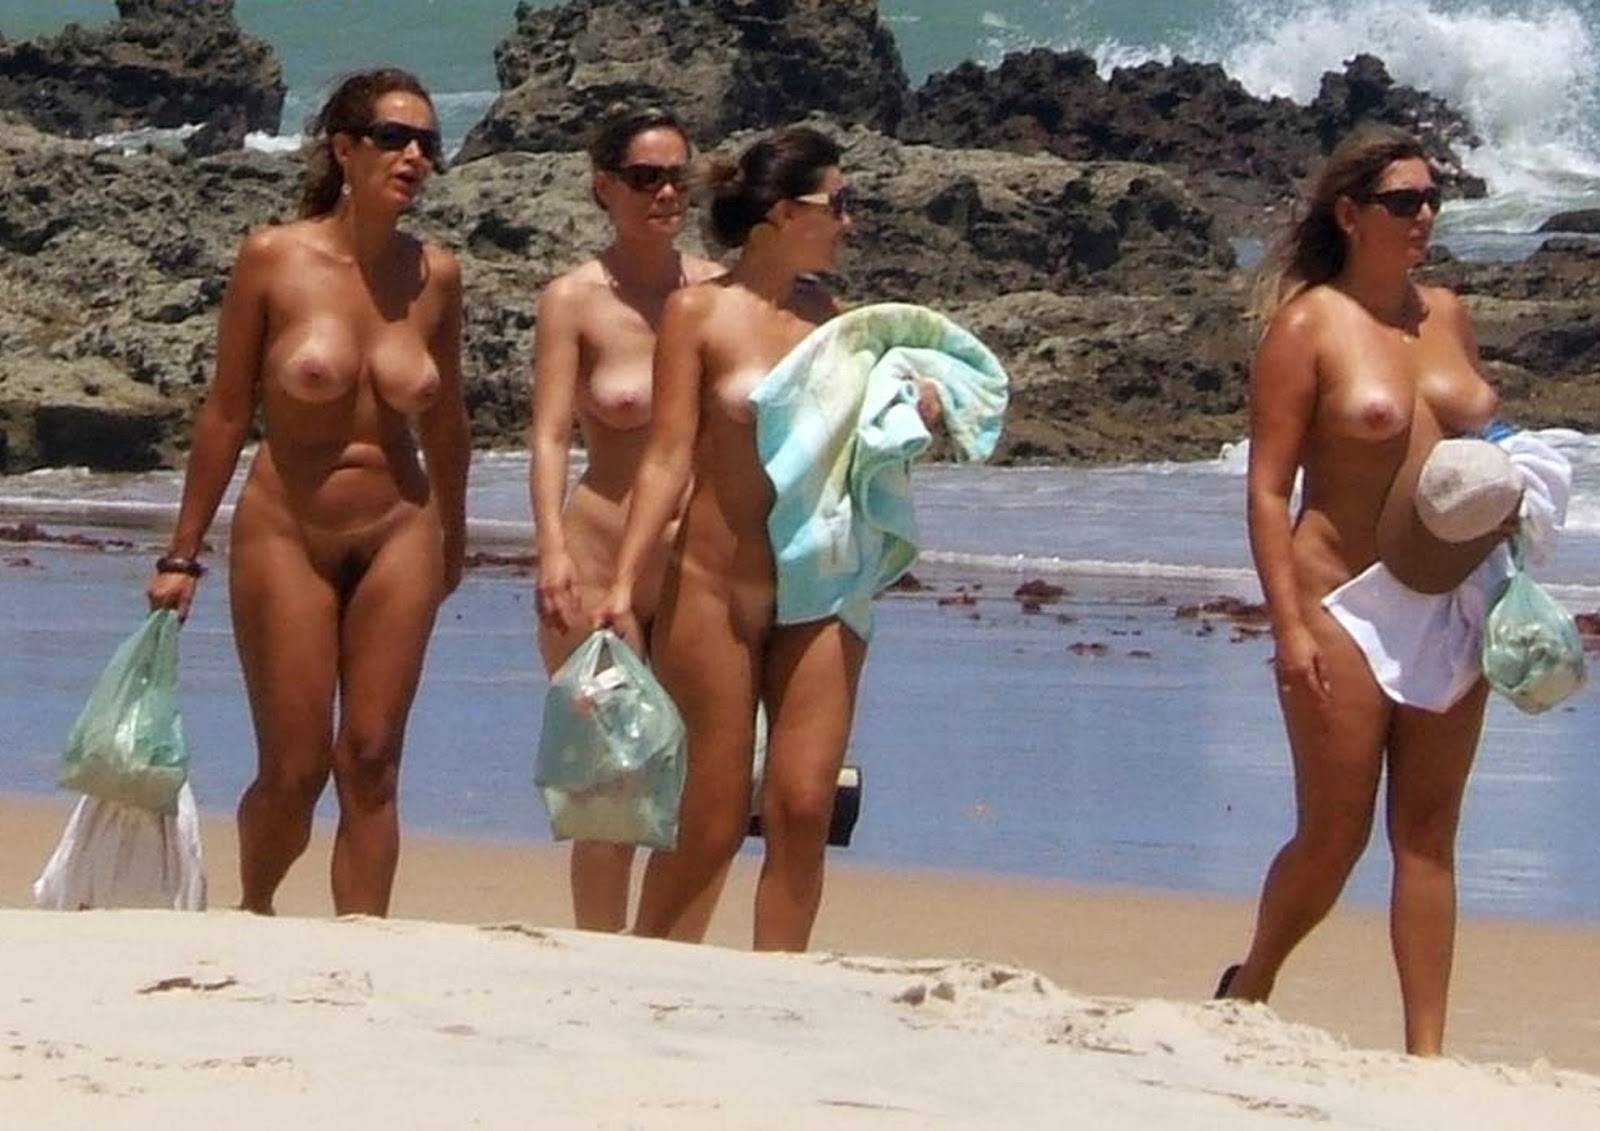 Brazil beaches nude image